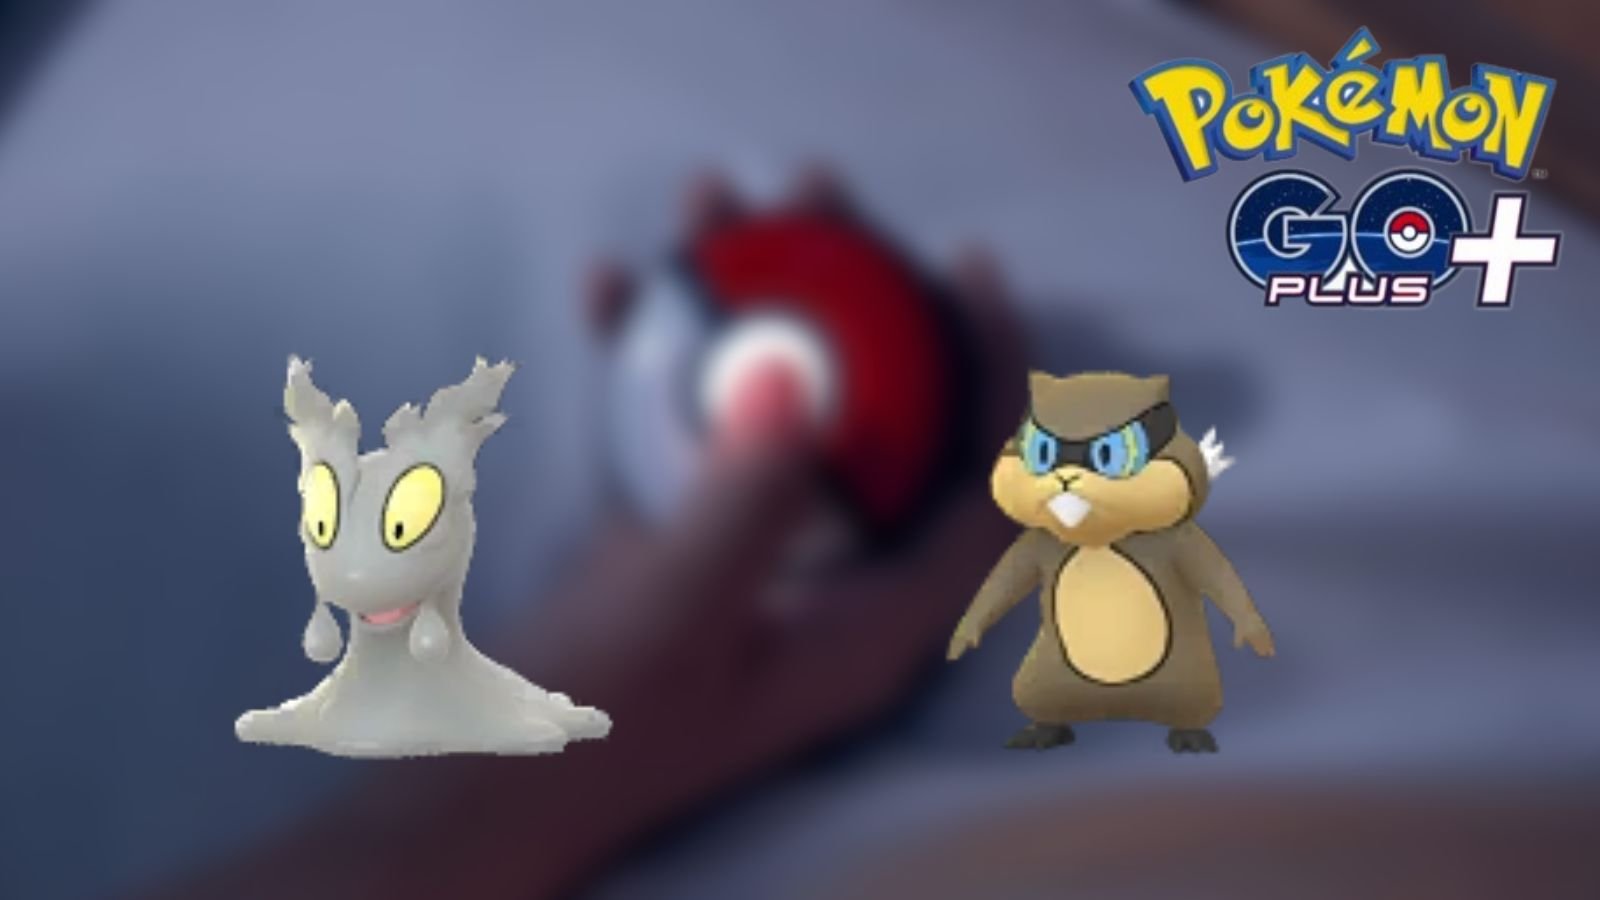 Pokemon Go trainer devastated as Go Plus+ reveals insane Shiny encounters  they missed - Dexerto